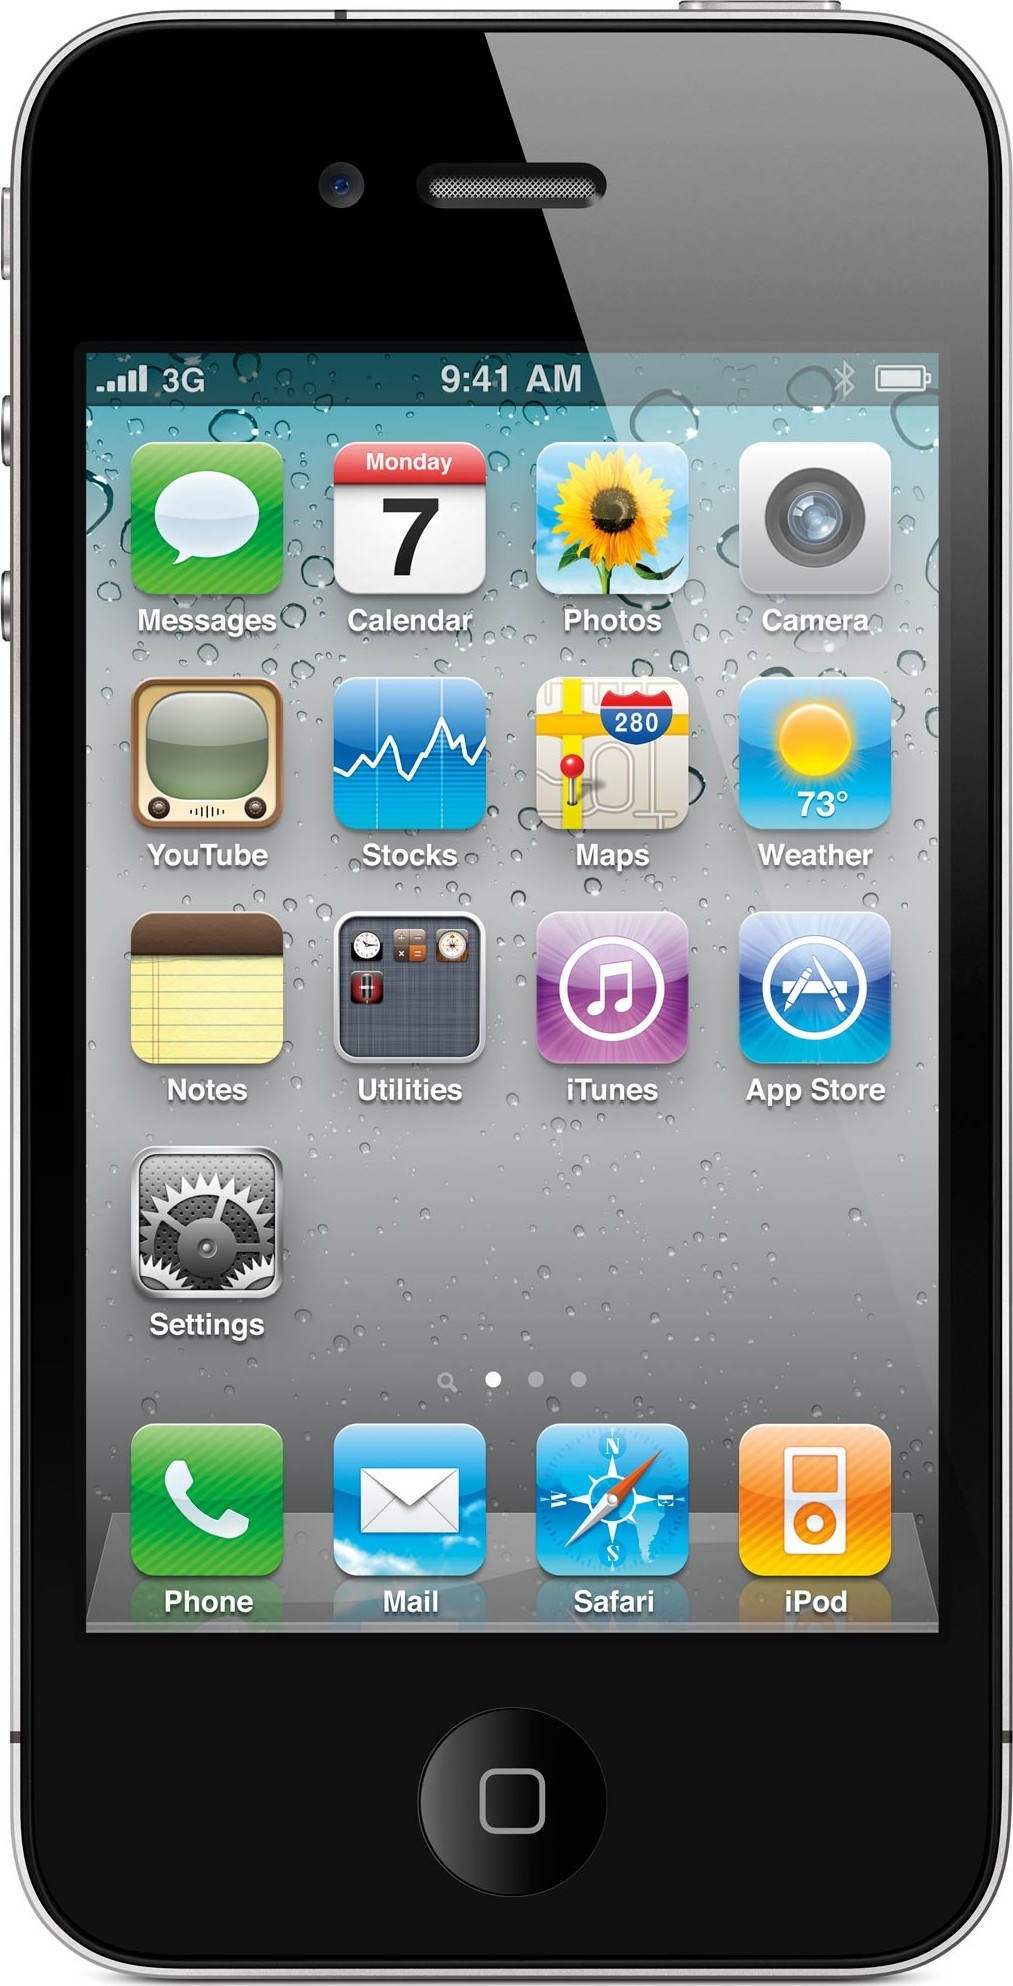 Apple iPhone 4 8GB (Black) - зображення 1